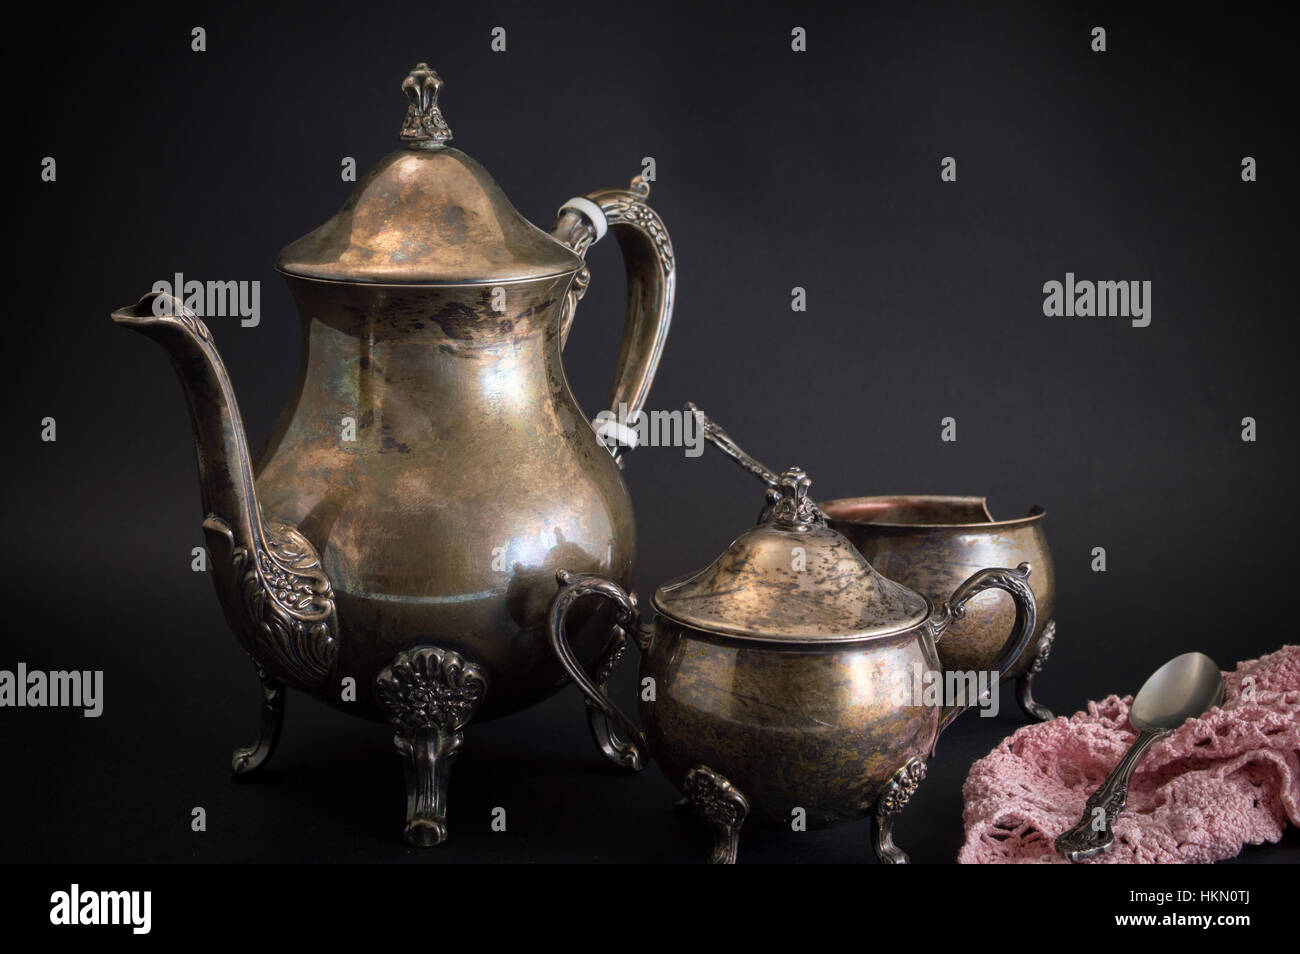 Old silver kettle utensils on black background Stock Photo